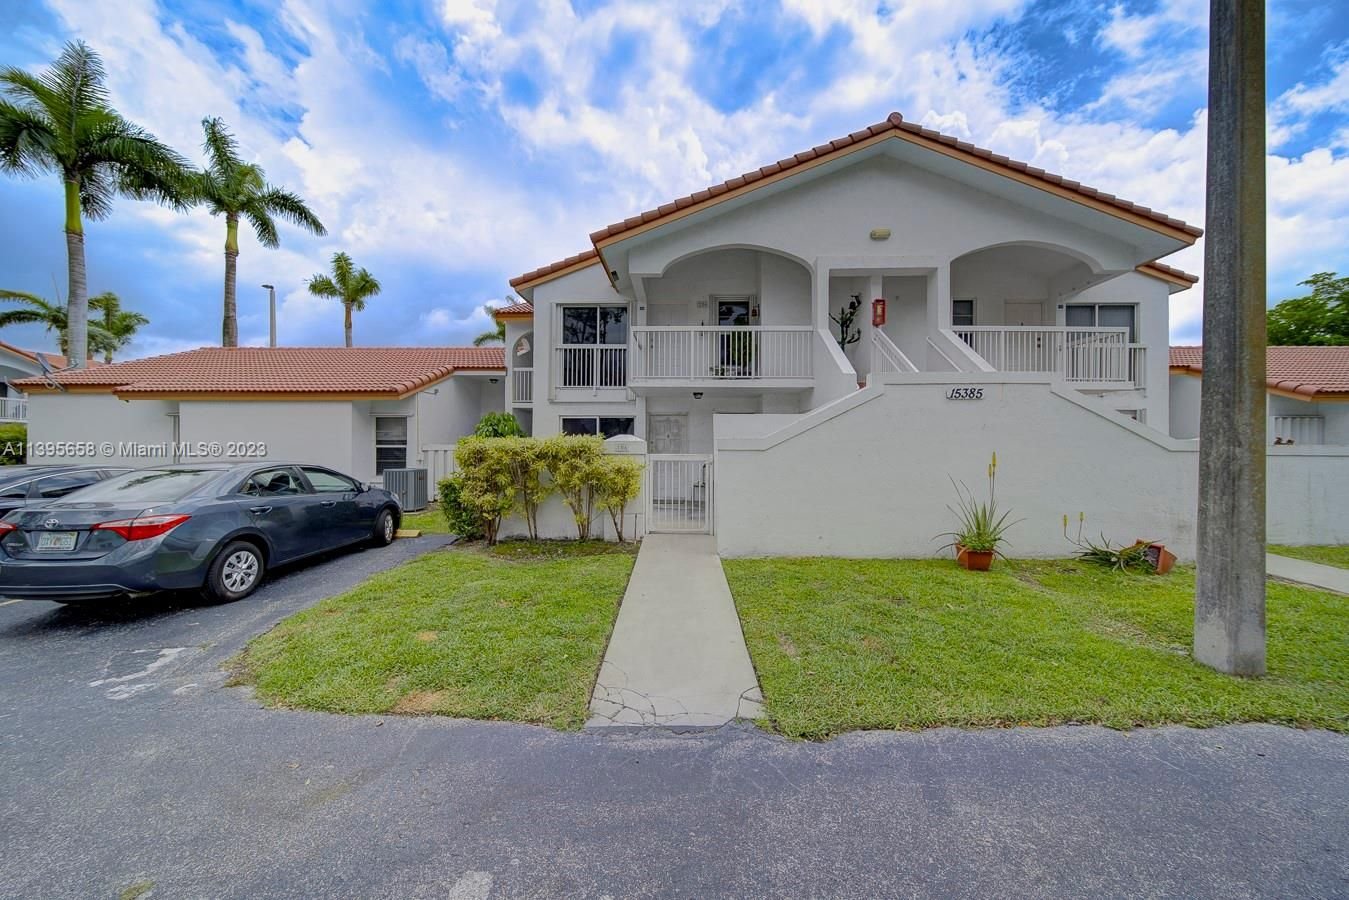 Real estate property located at 15385 76th Ter #206, Miami-Dade County, Miami, FL